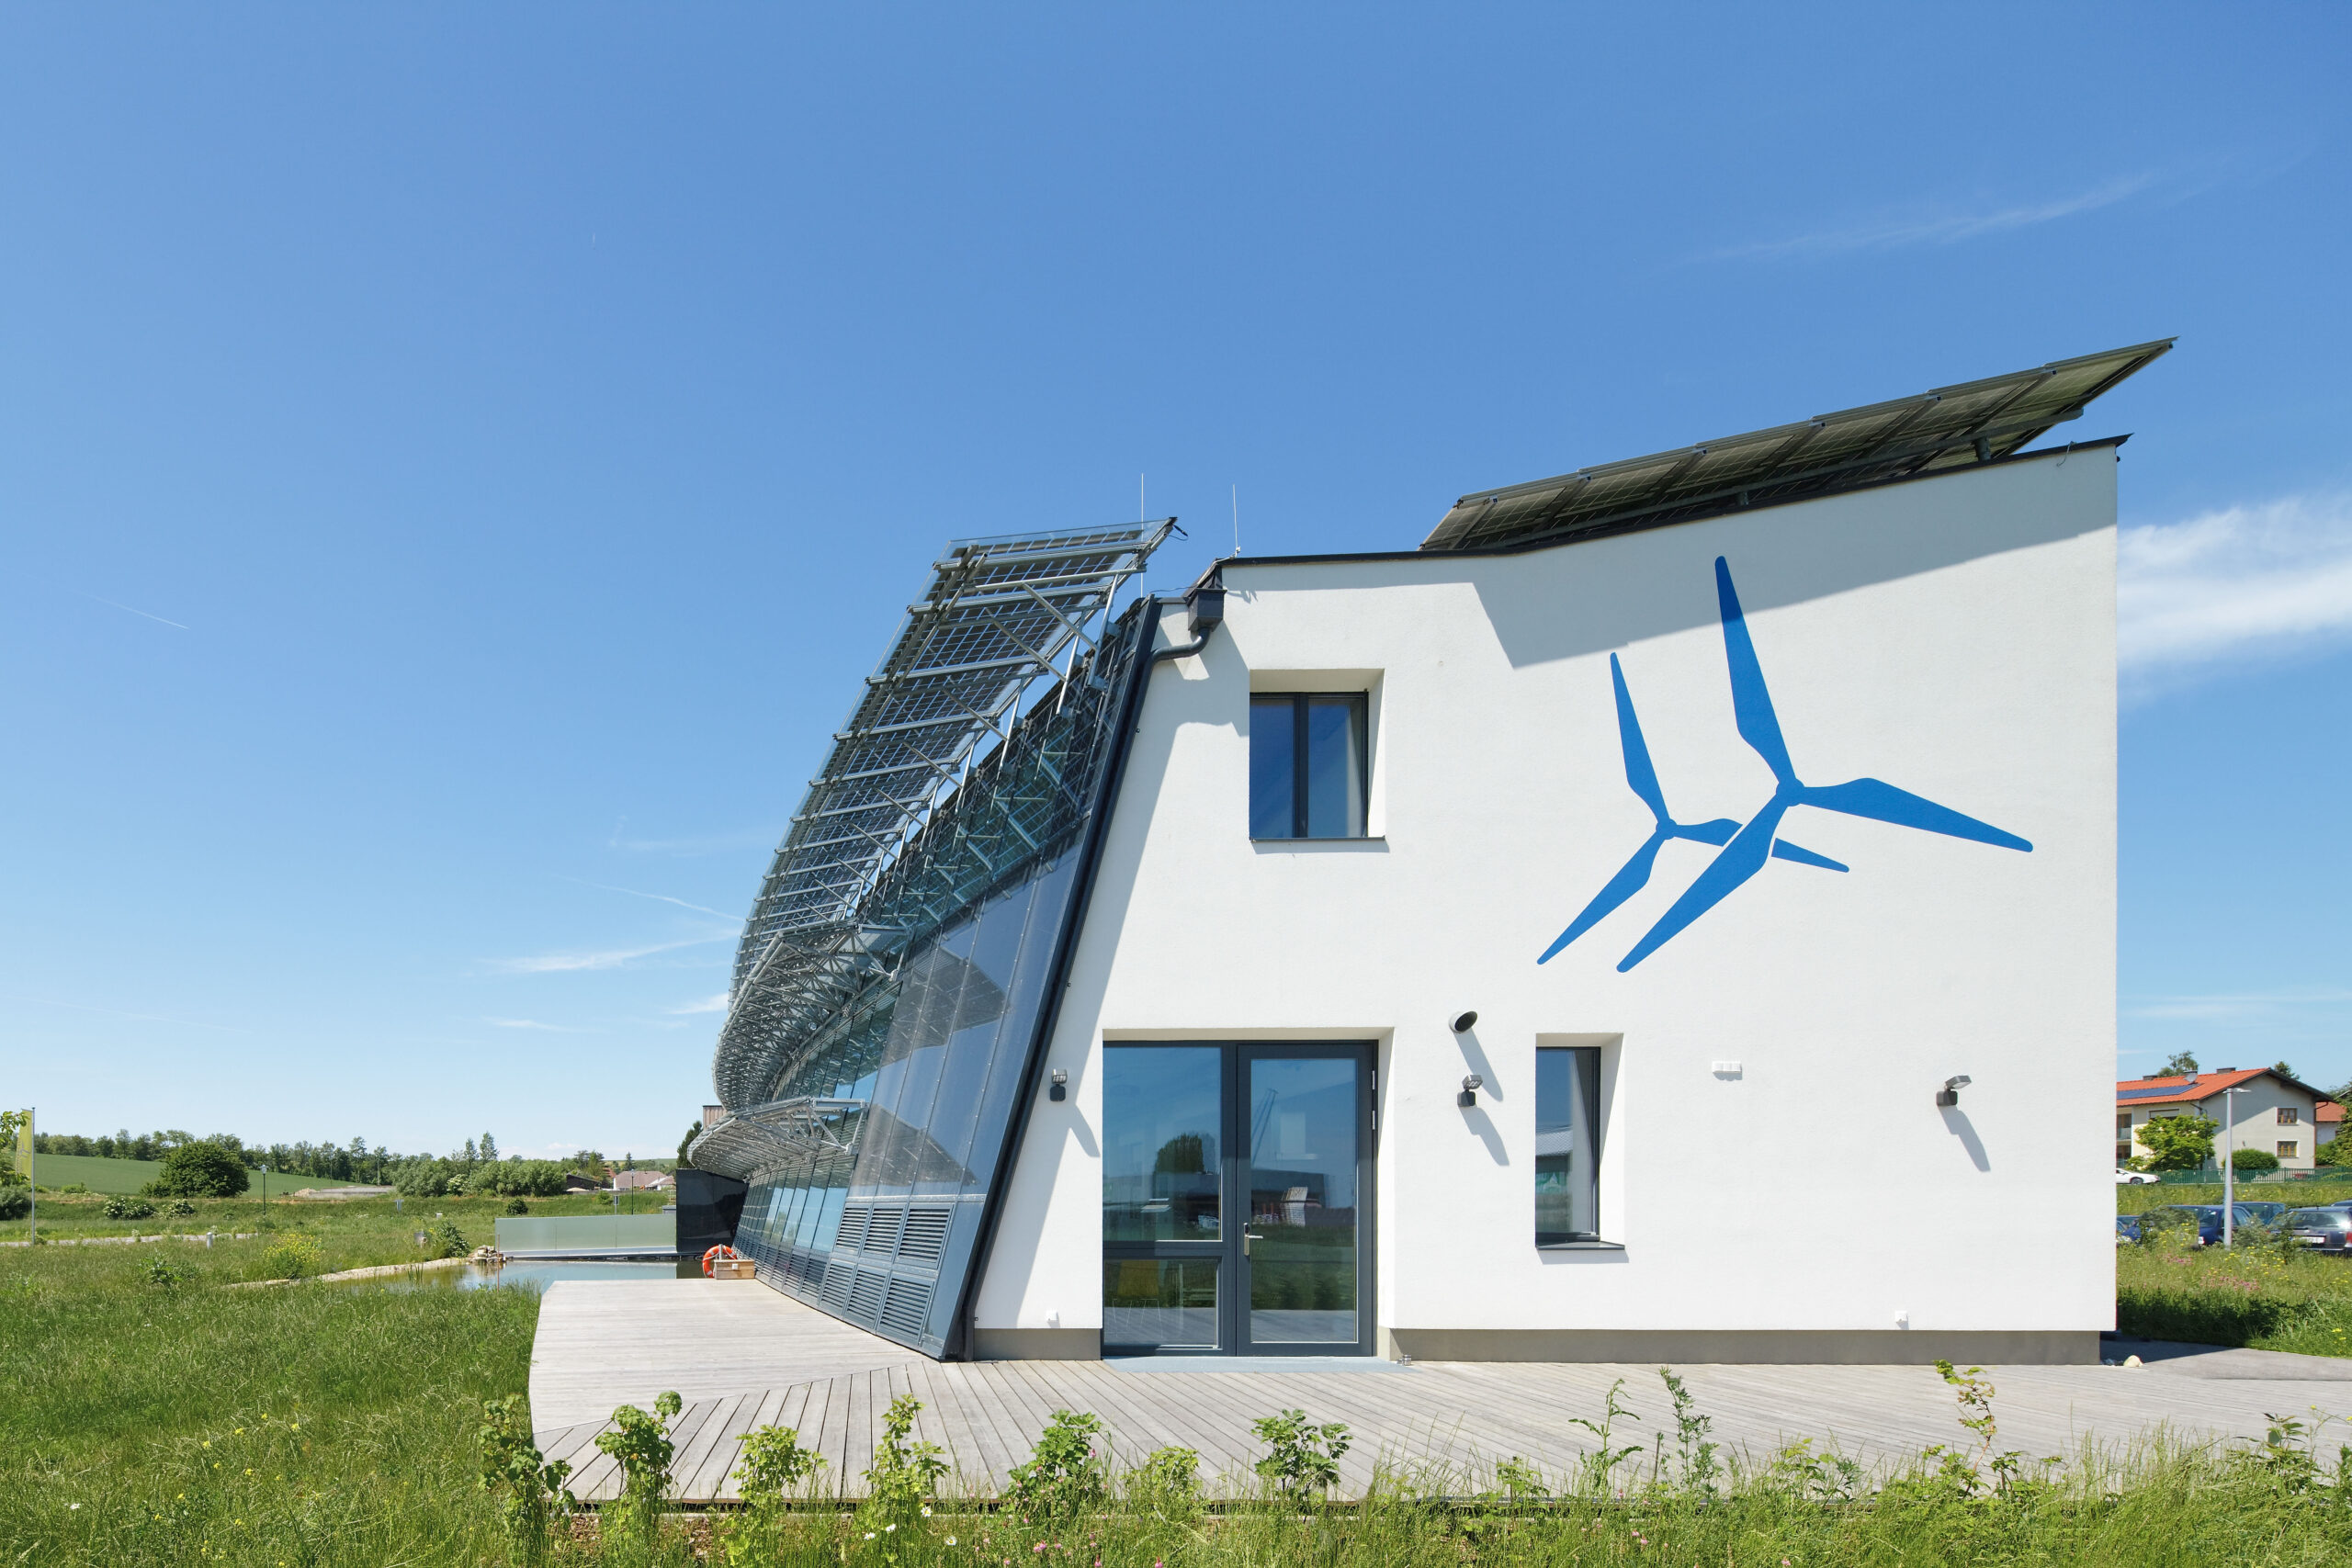 Windkraft Simonsfeld, Lower Austria by Arch. 